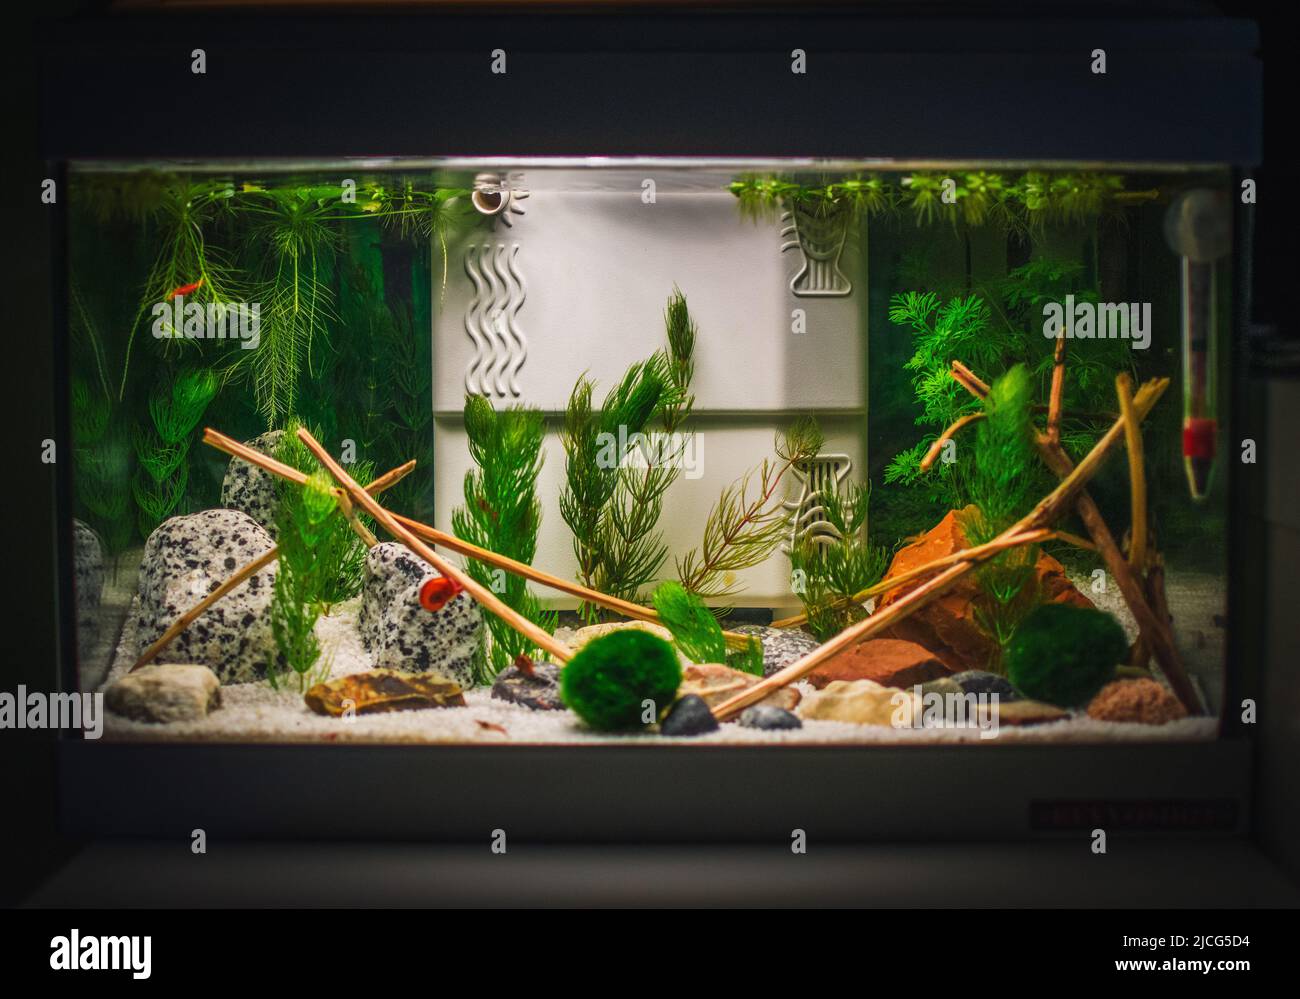 a great jungle planted aquarium Stock Photo